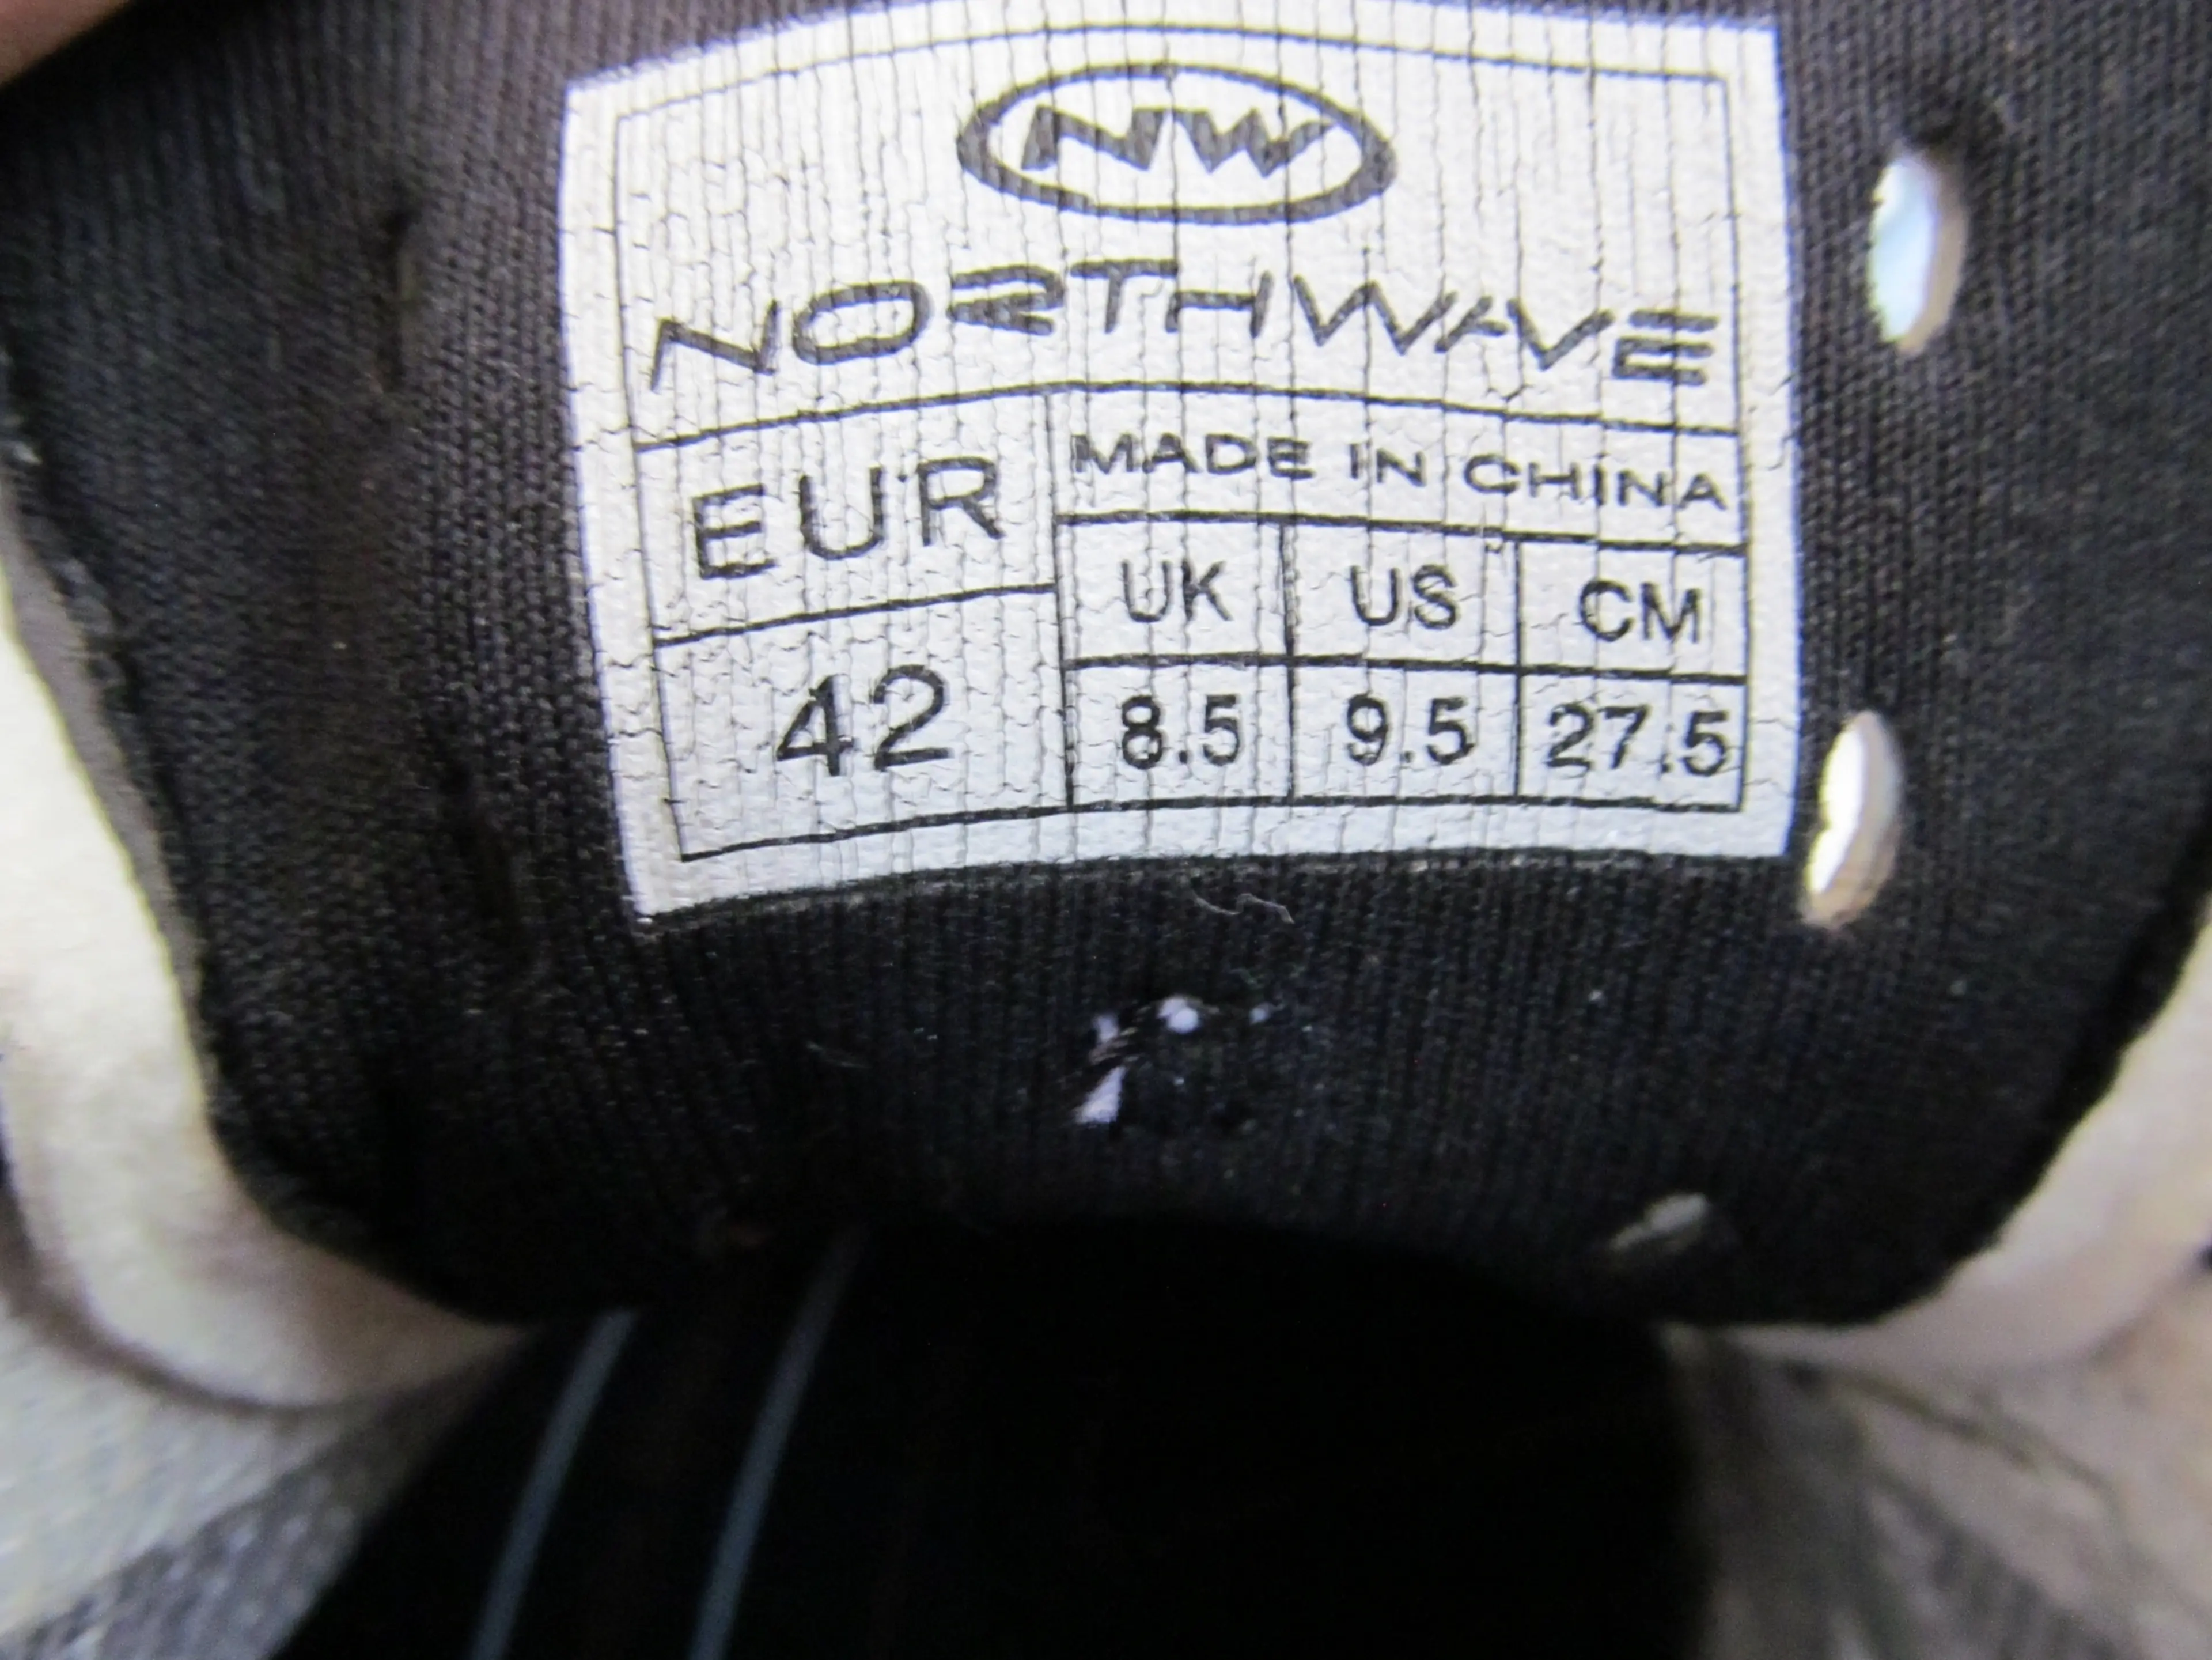 Image Pantofi NorthWave nr42, 27.5cm